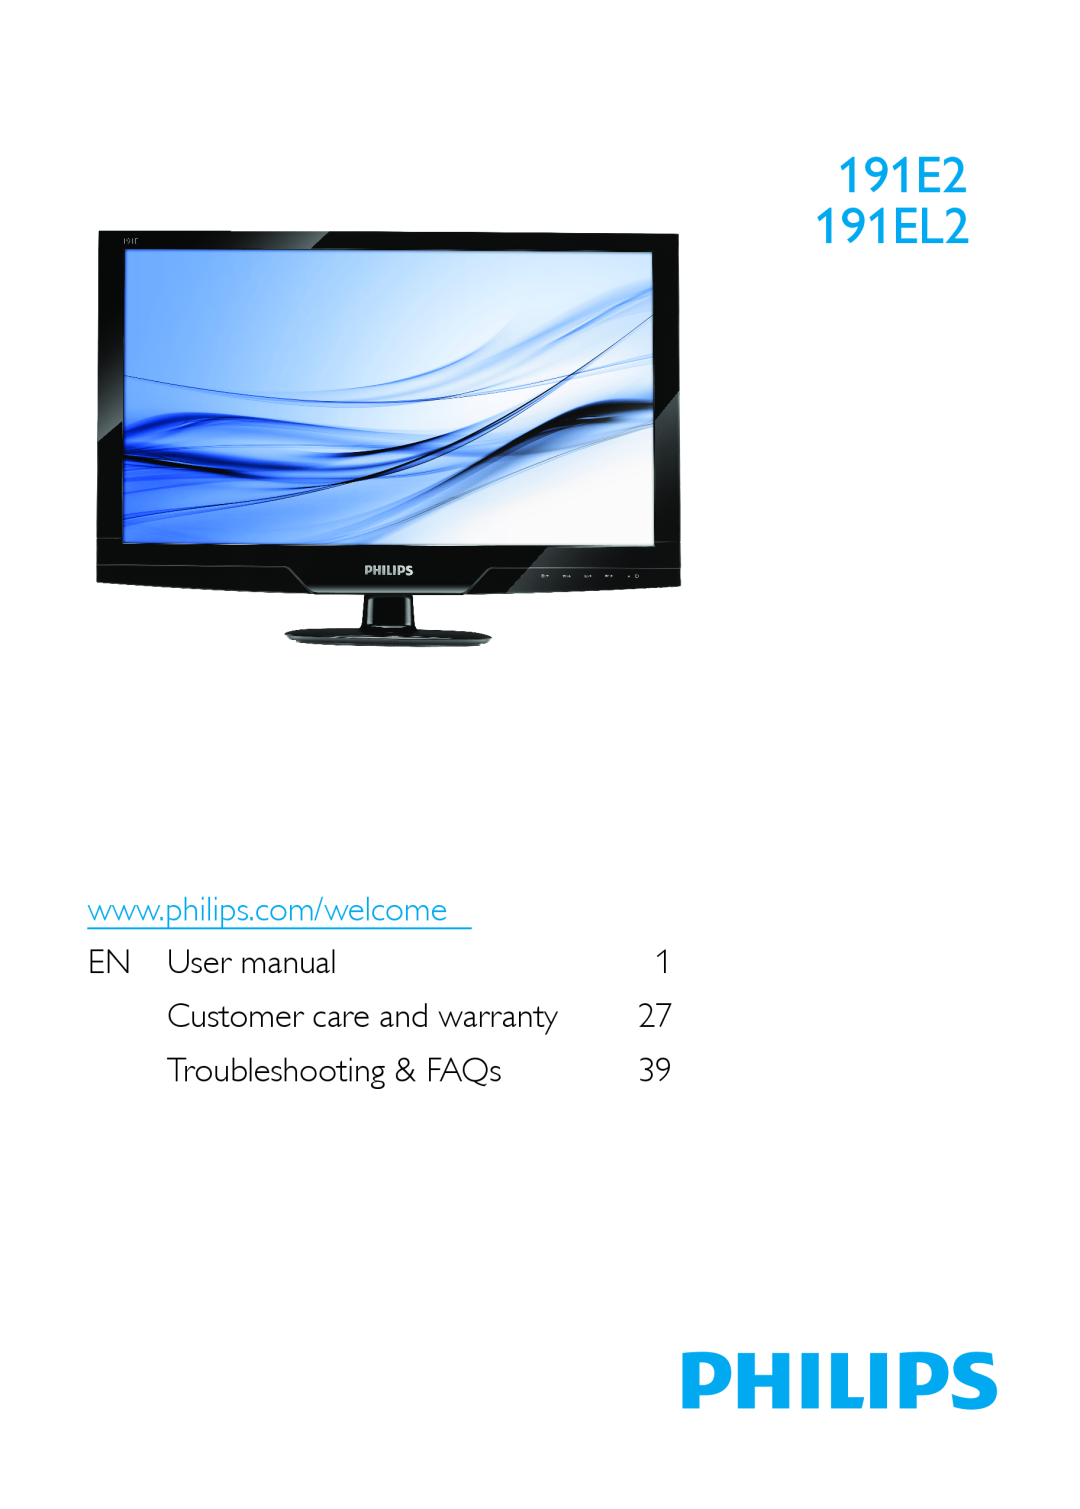 Philips 191E2SB/27 user manual EN User manual, Troubleshooting & FAQs, 191E2 191EL2, Customer care and warranty 